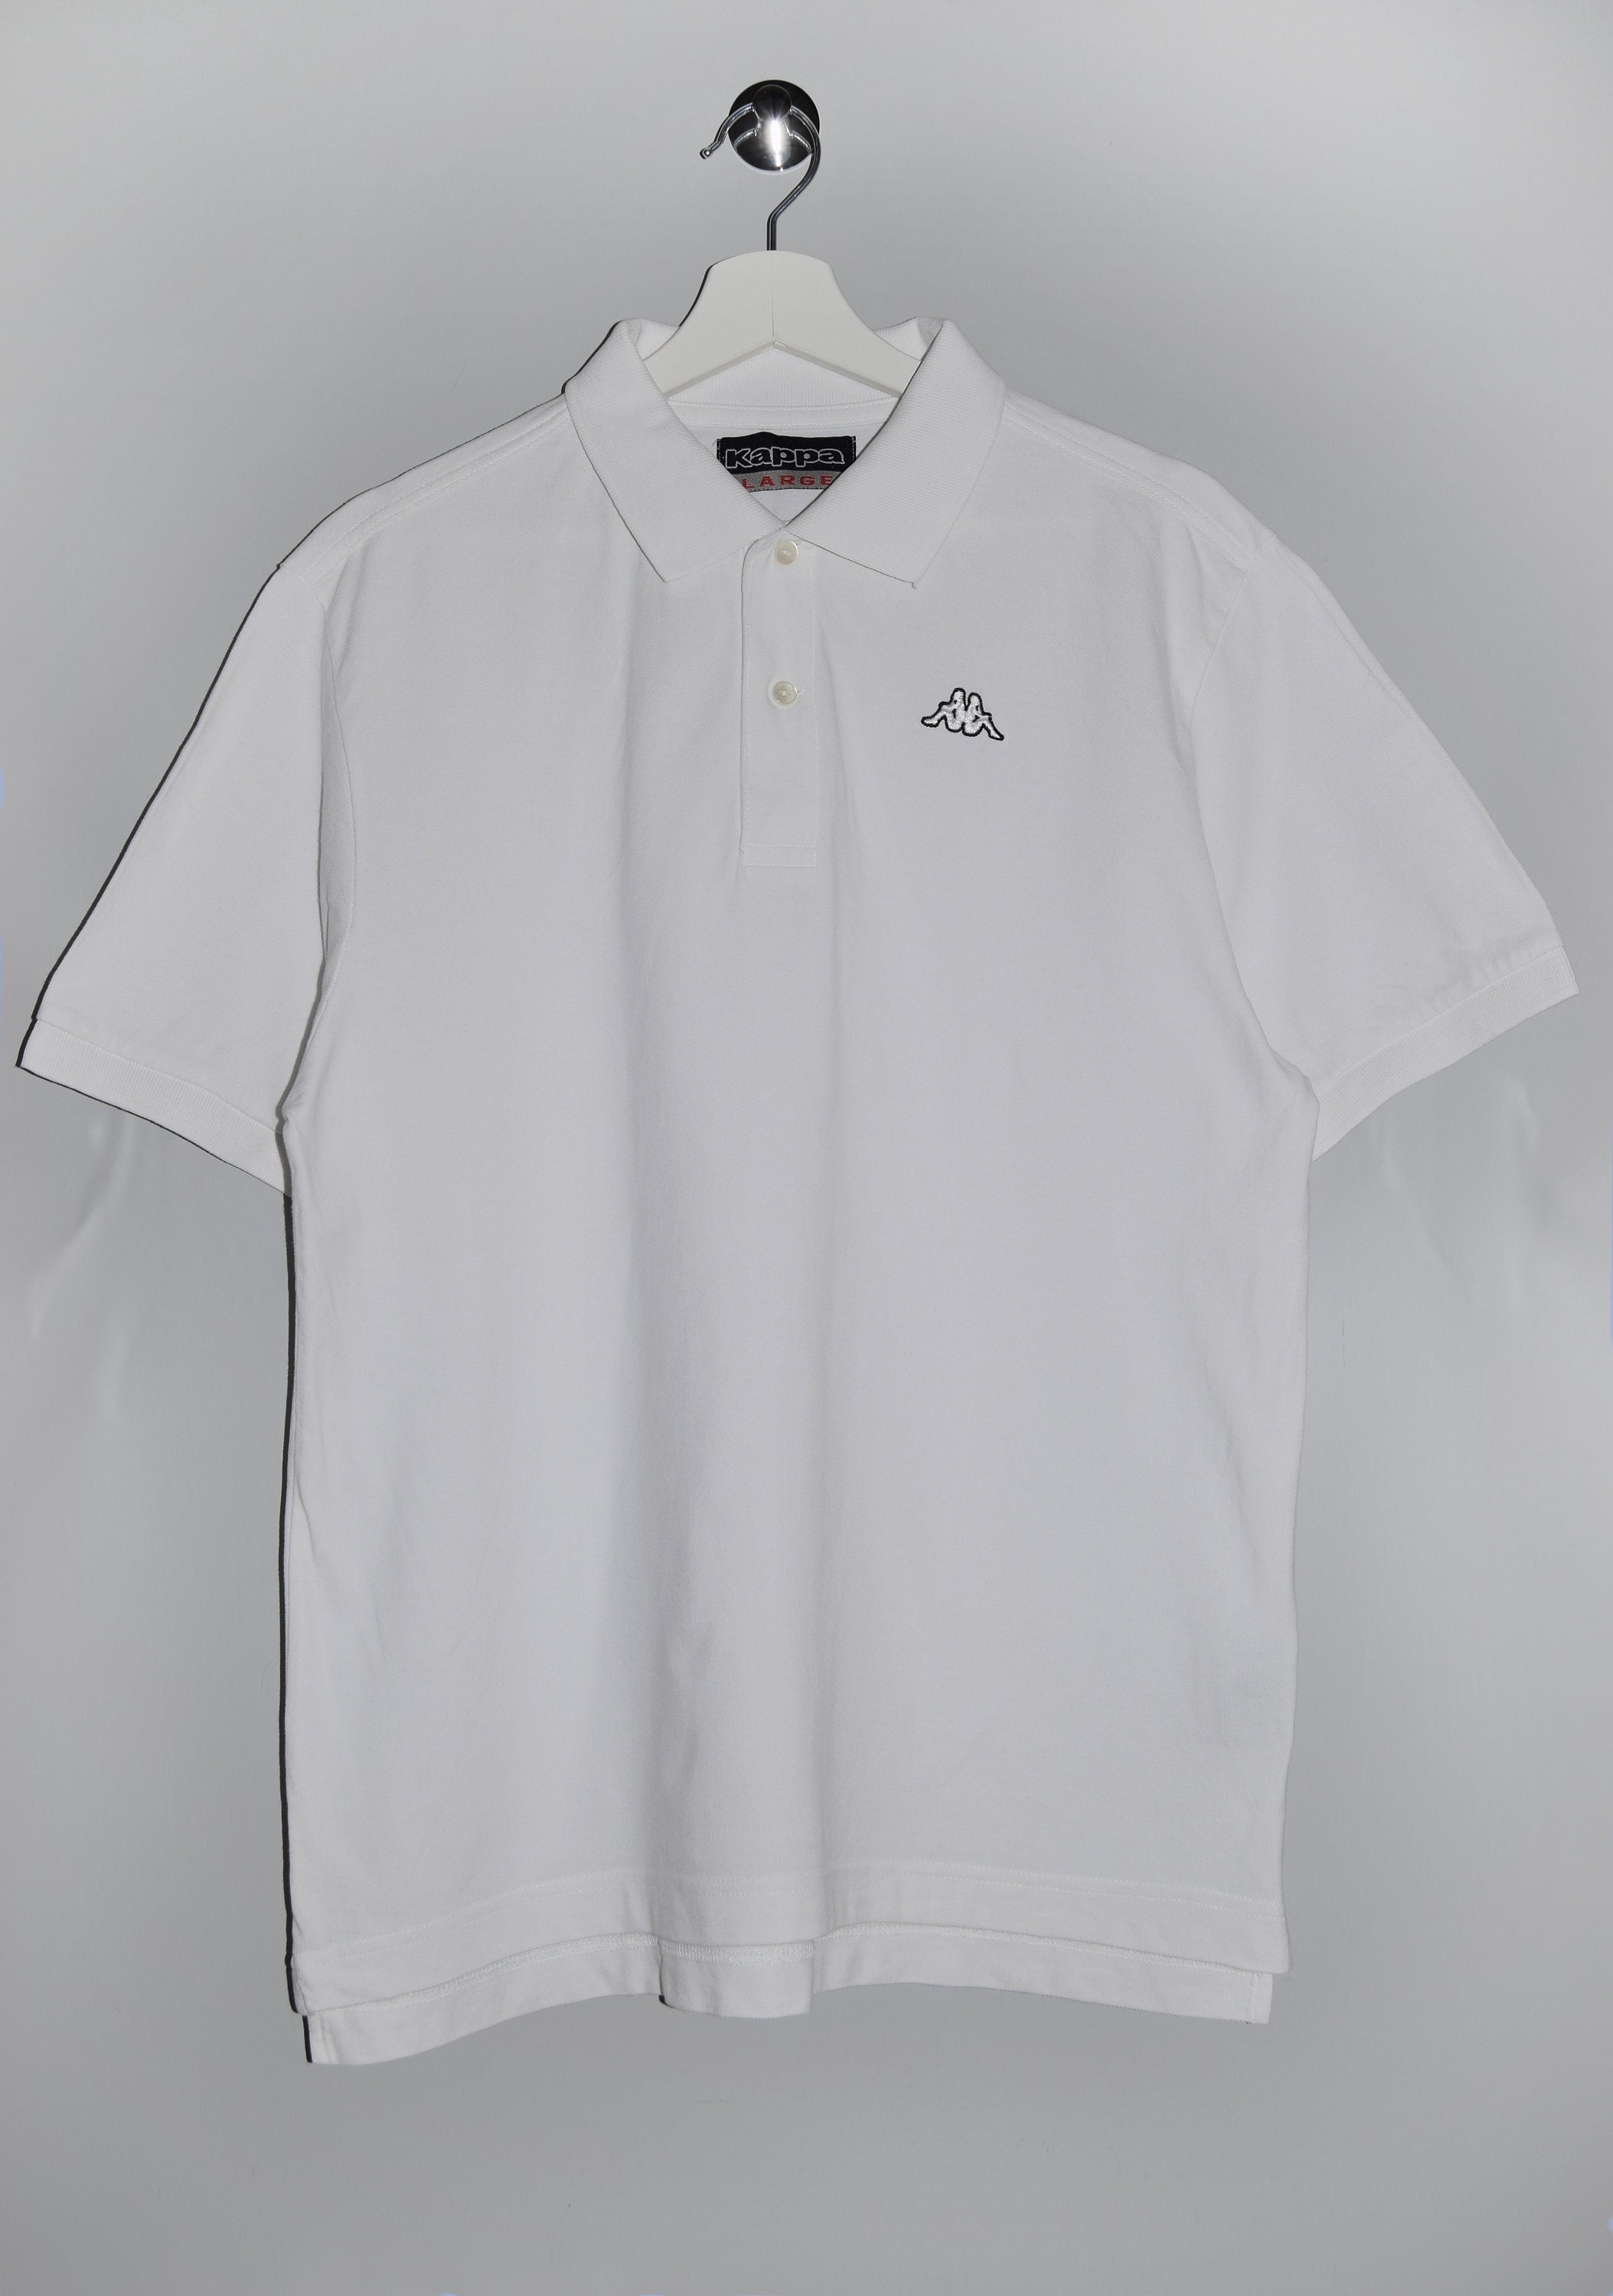 Kappa T-shirt Polo Shirt Button Streetwear - Etsy